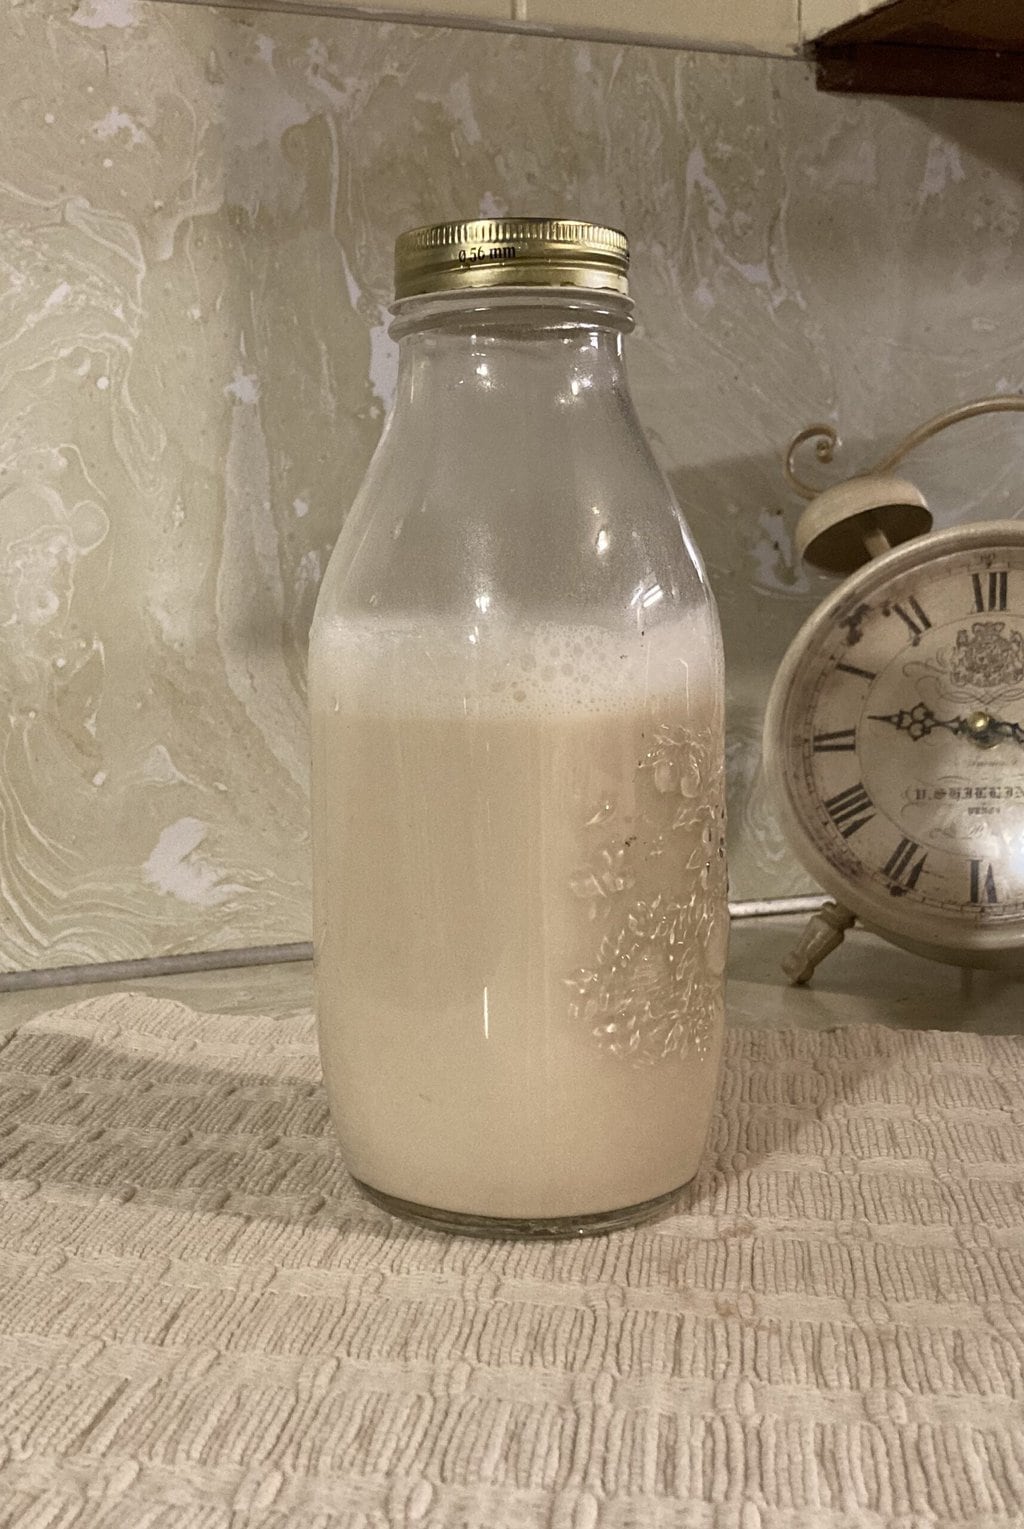 homemade creme brulee coffee creamer in a jar